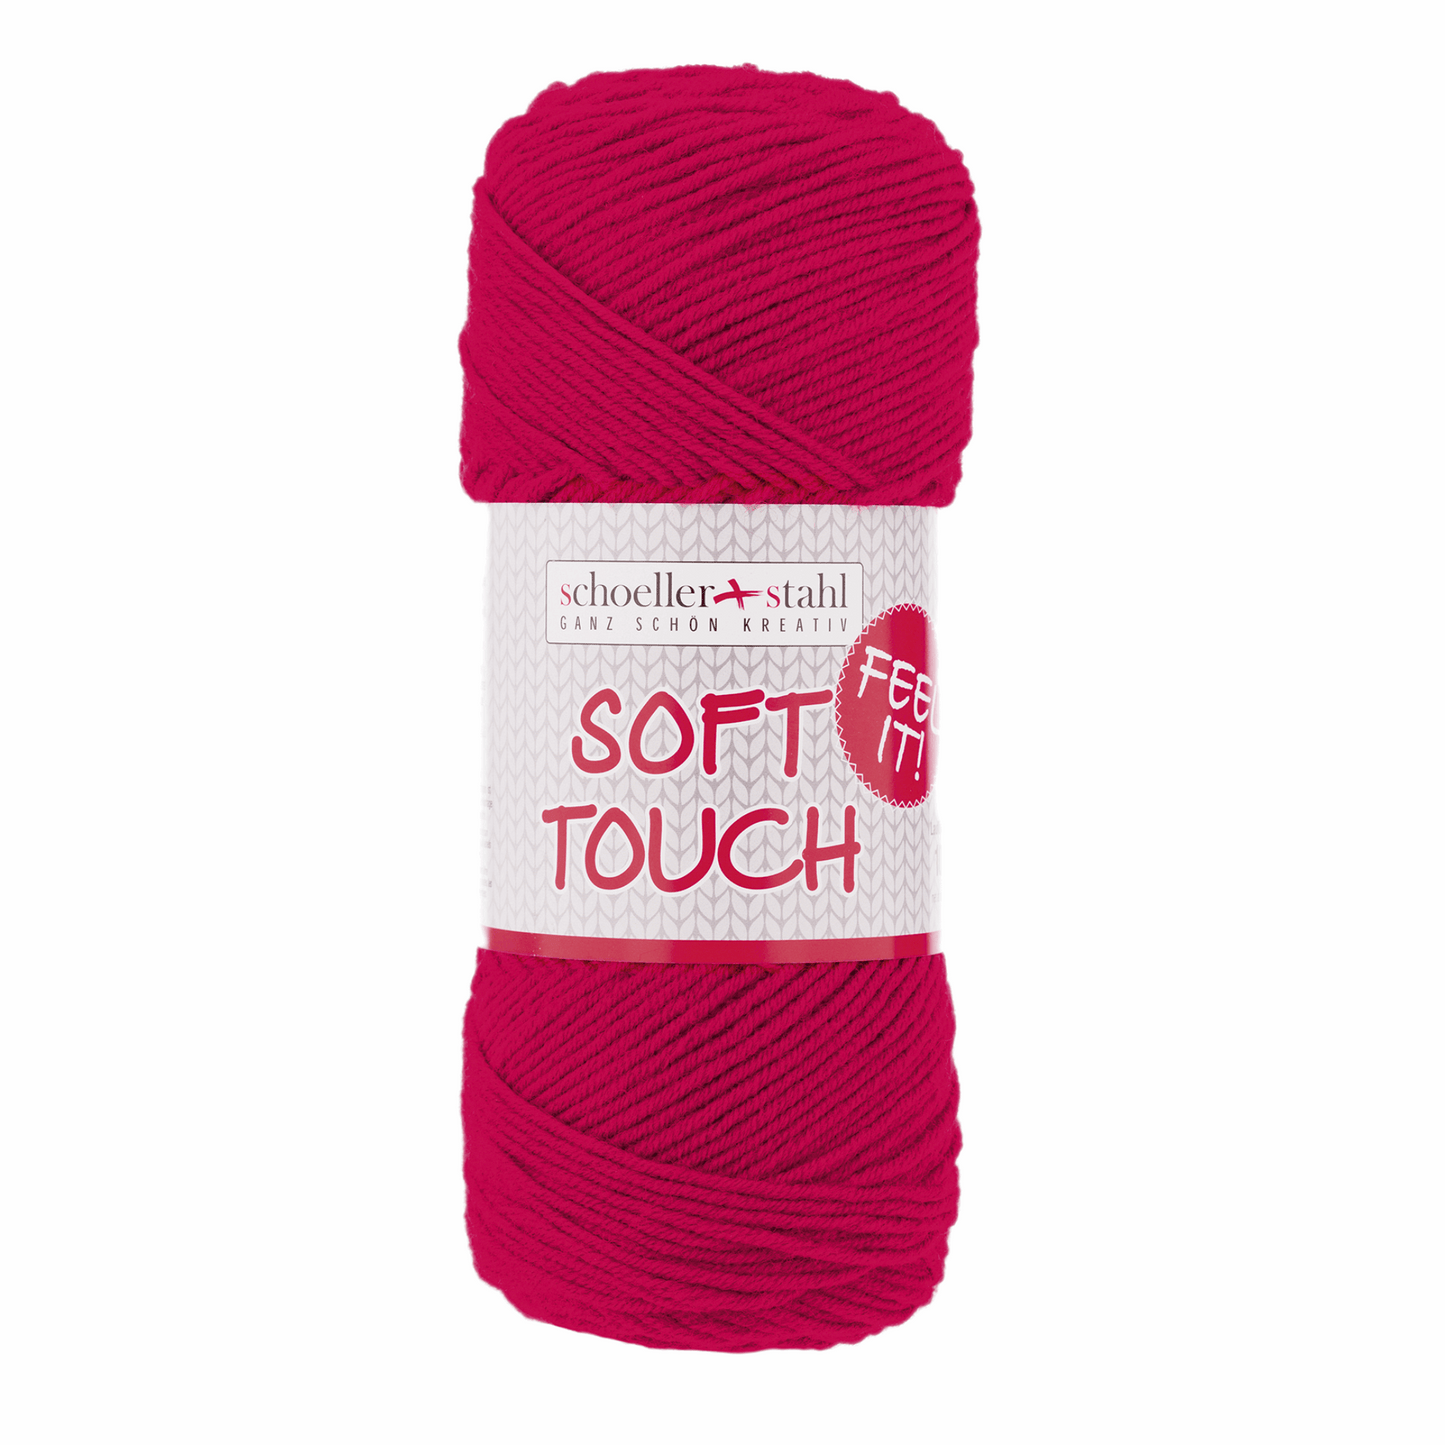 Soft touch 100g pullskin, 90283, Farbe 3, kirsche